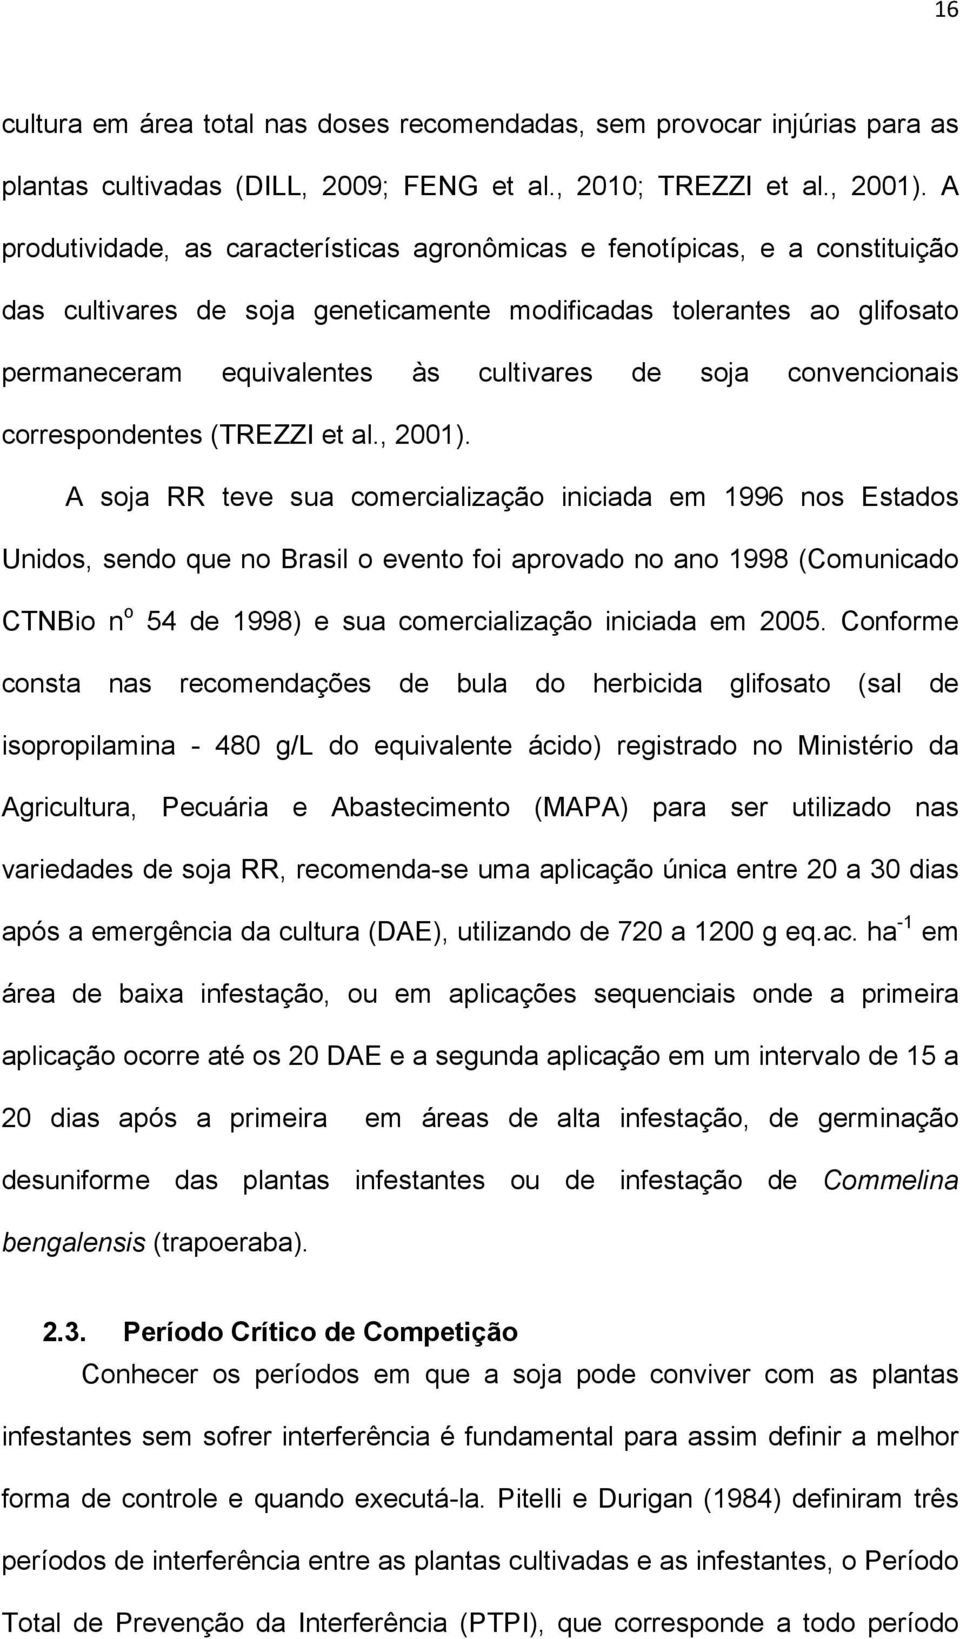 soja convencionais correspondentes (TREZZI et al., 2001).